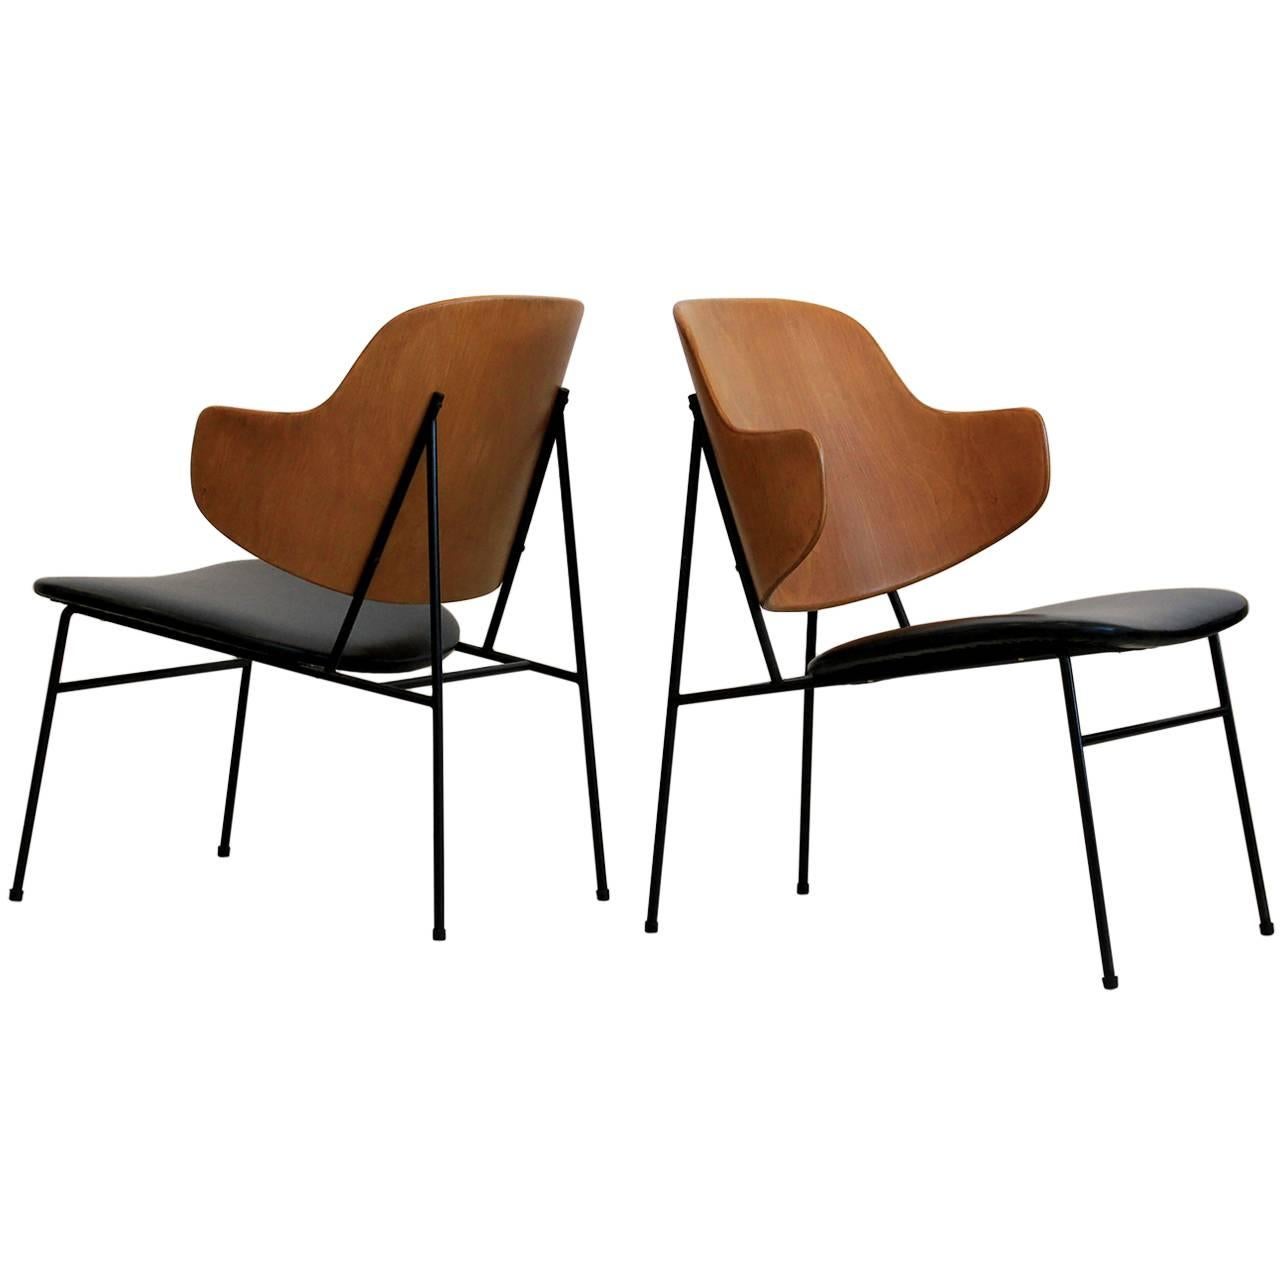 Kofod-Larsen "Penguin" Chairs